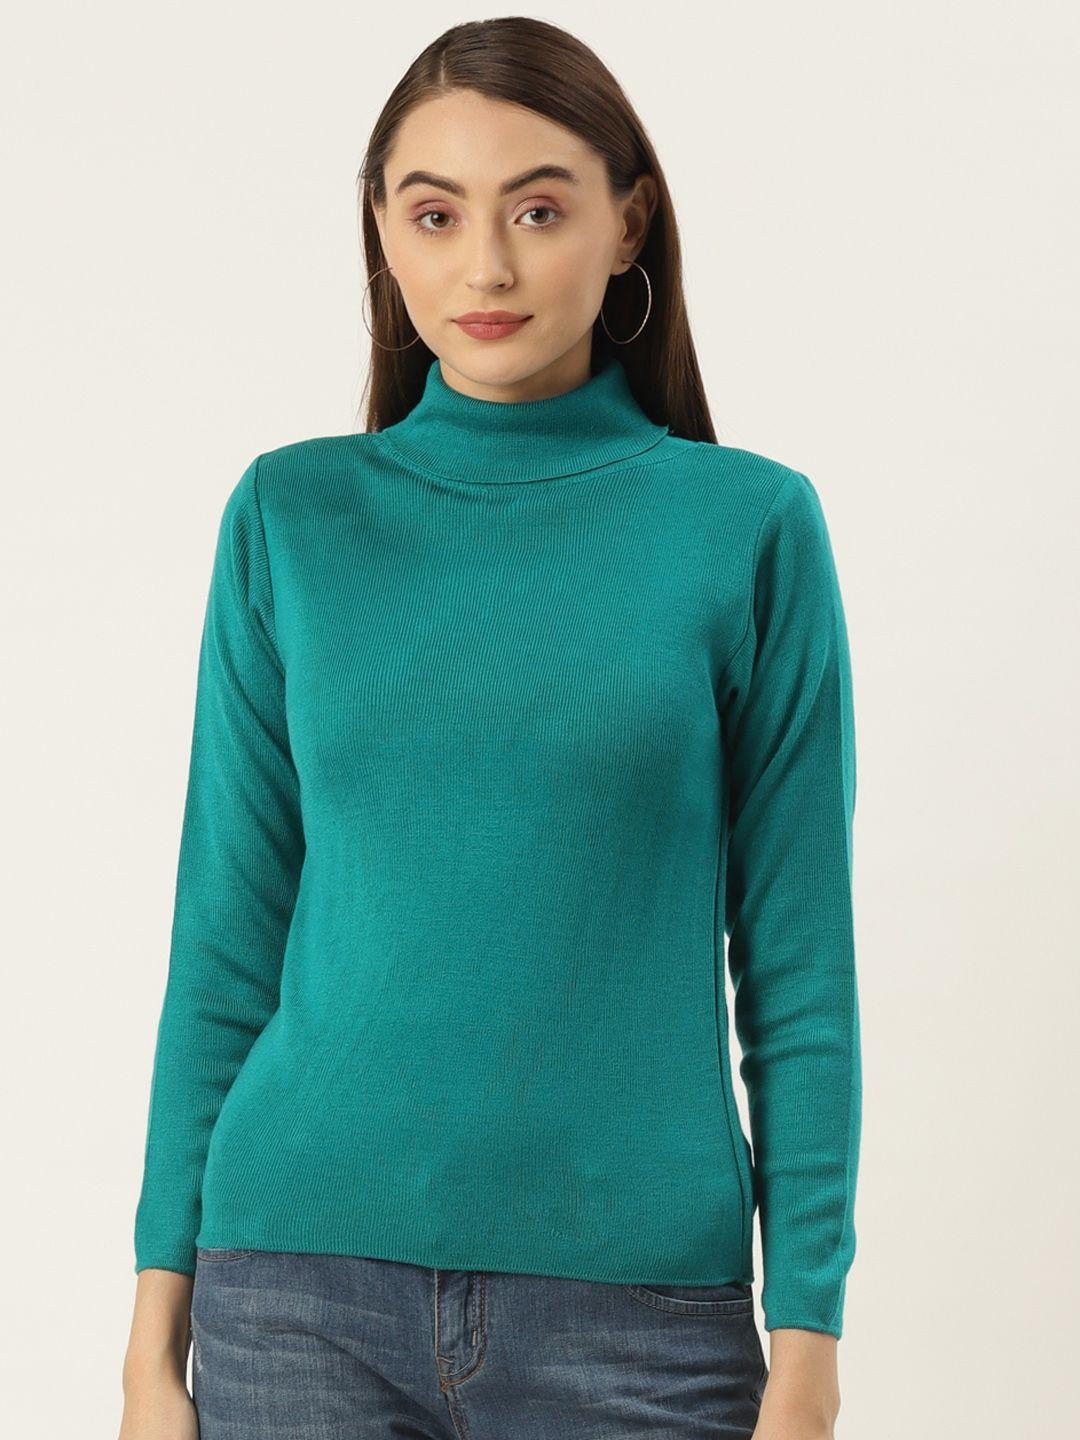 fabnest-women-turquoise-blue-turtle-neck-sweater